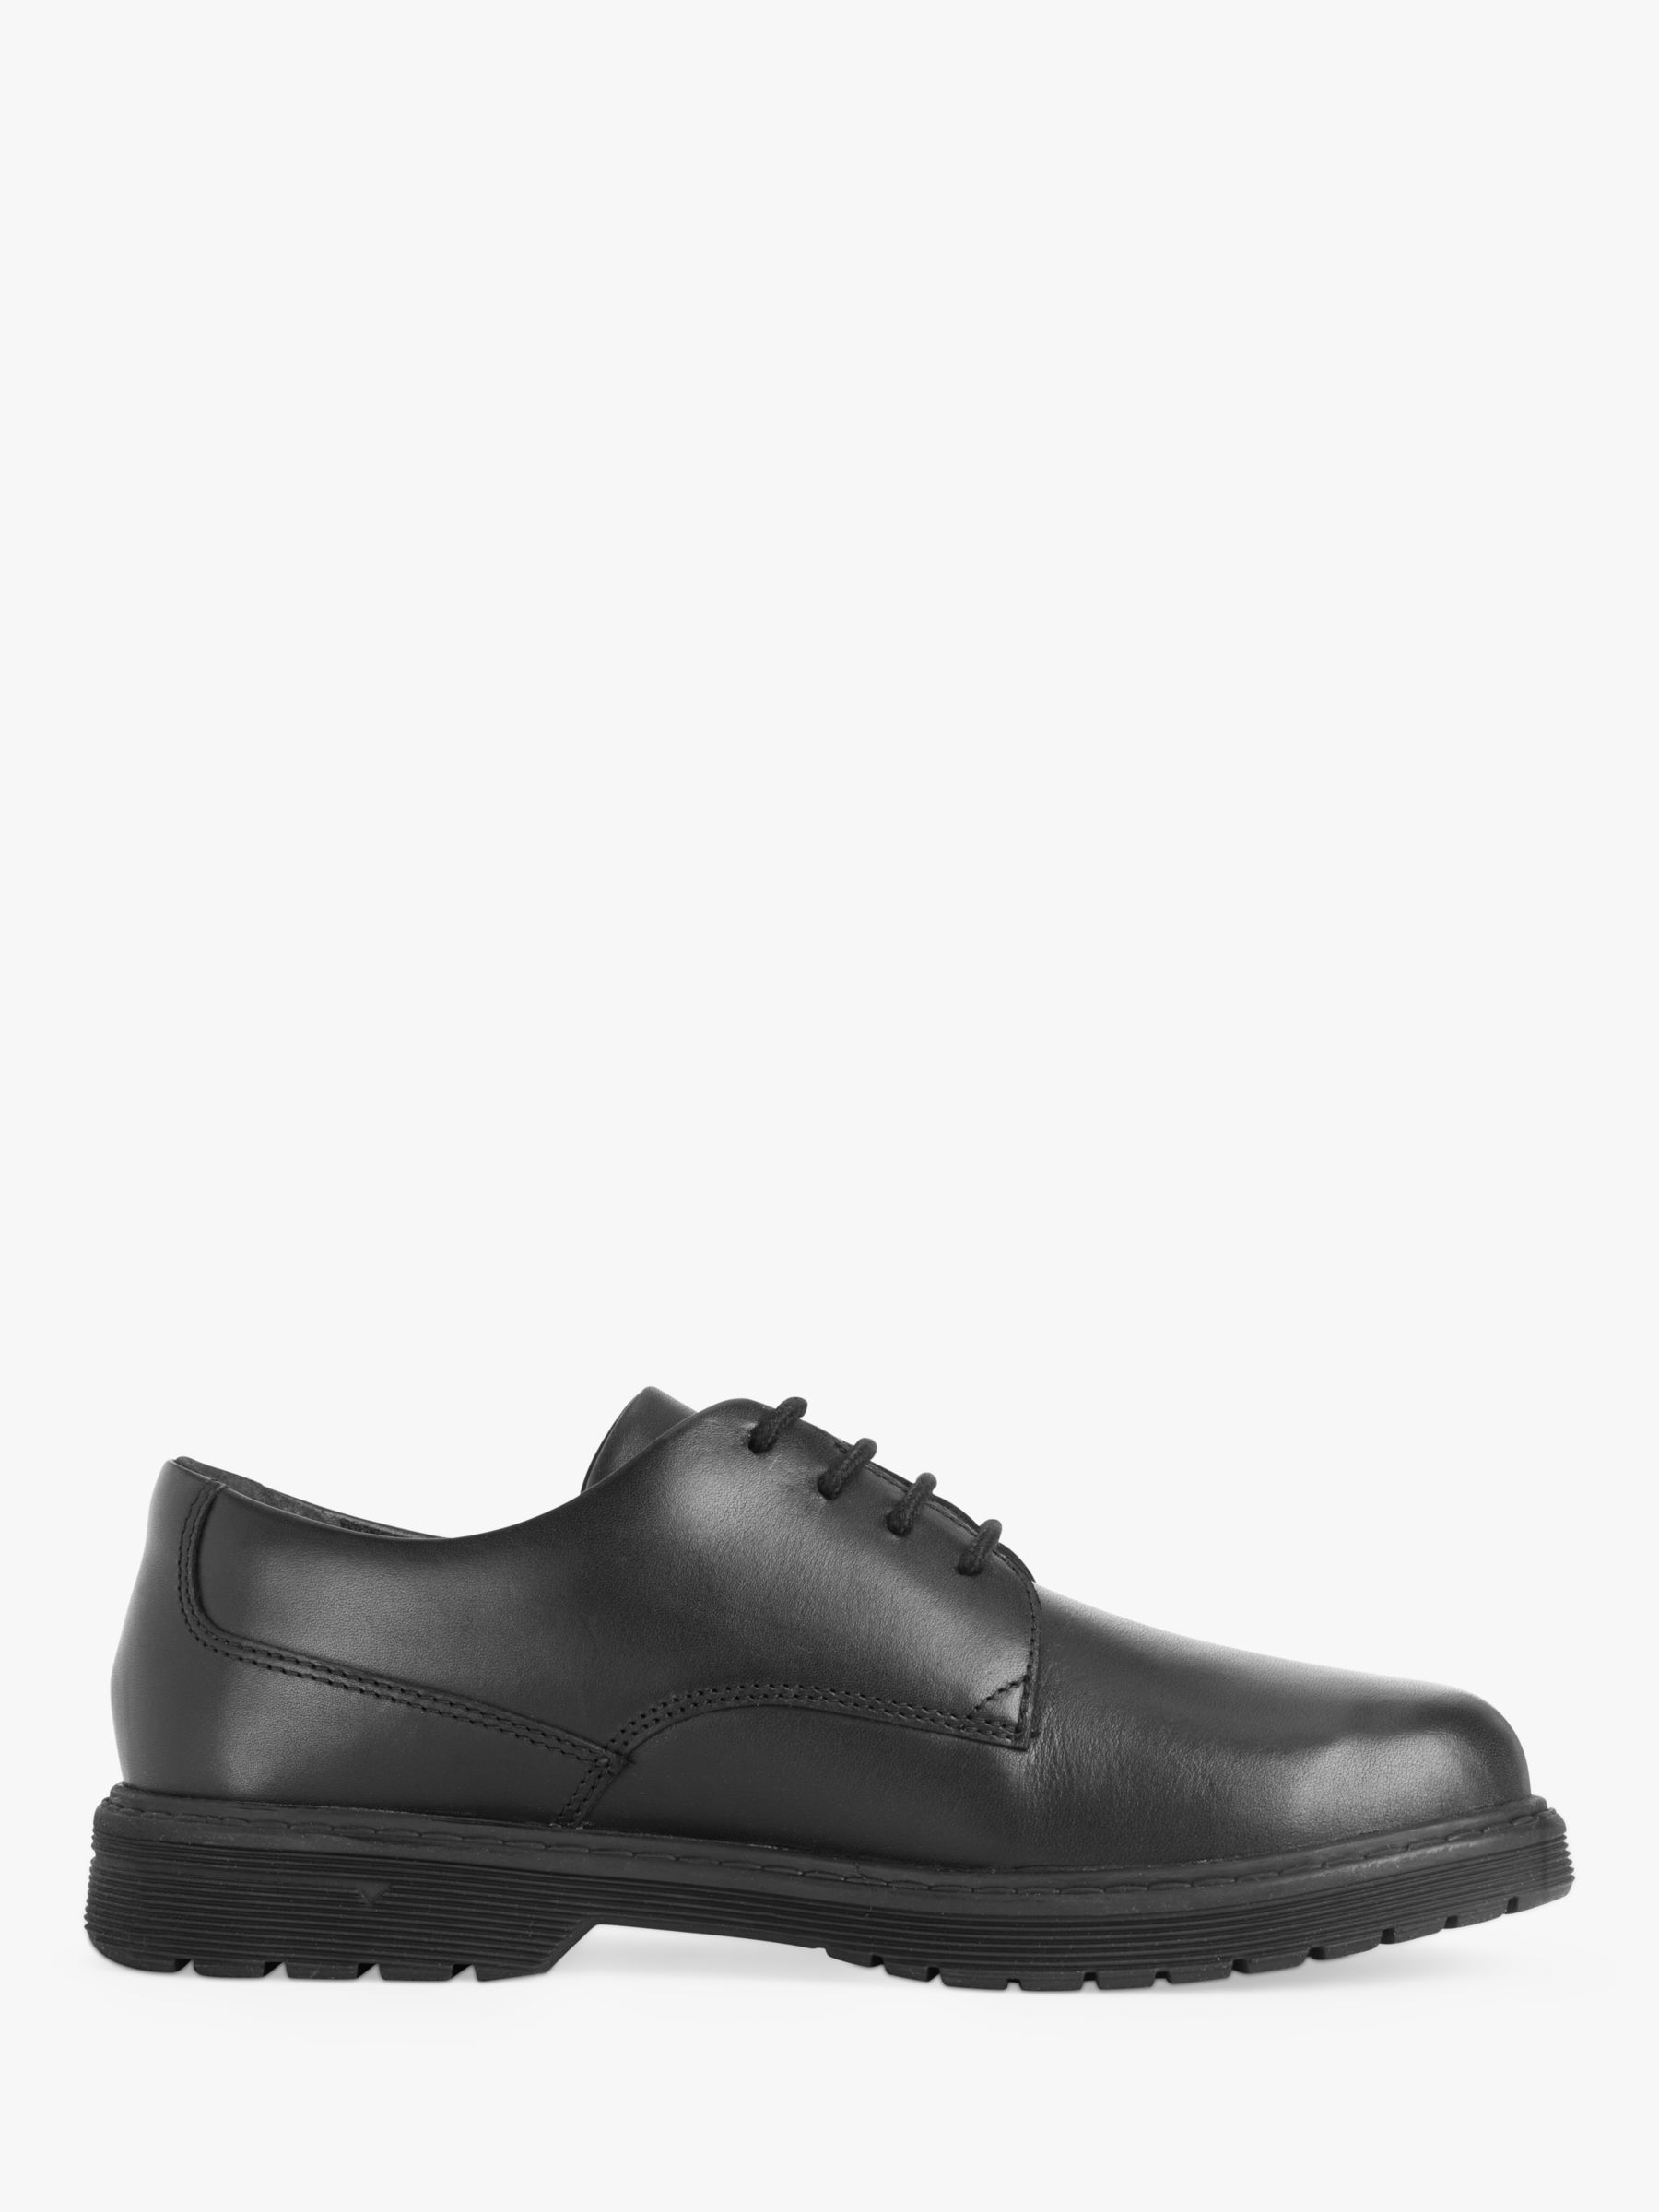 Start-Rite Kids' Glitch Leather School Shoes, Black at John Lewis ...